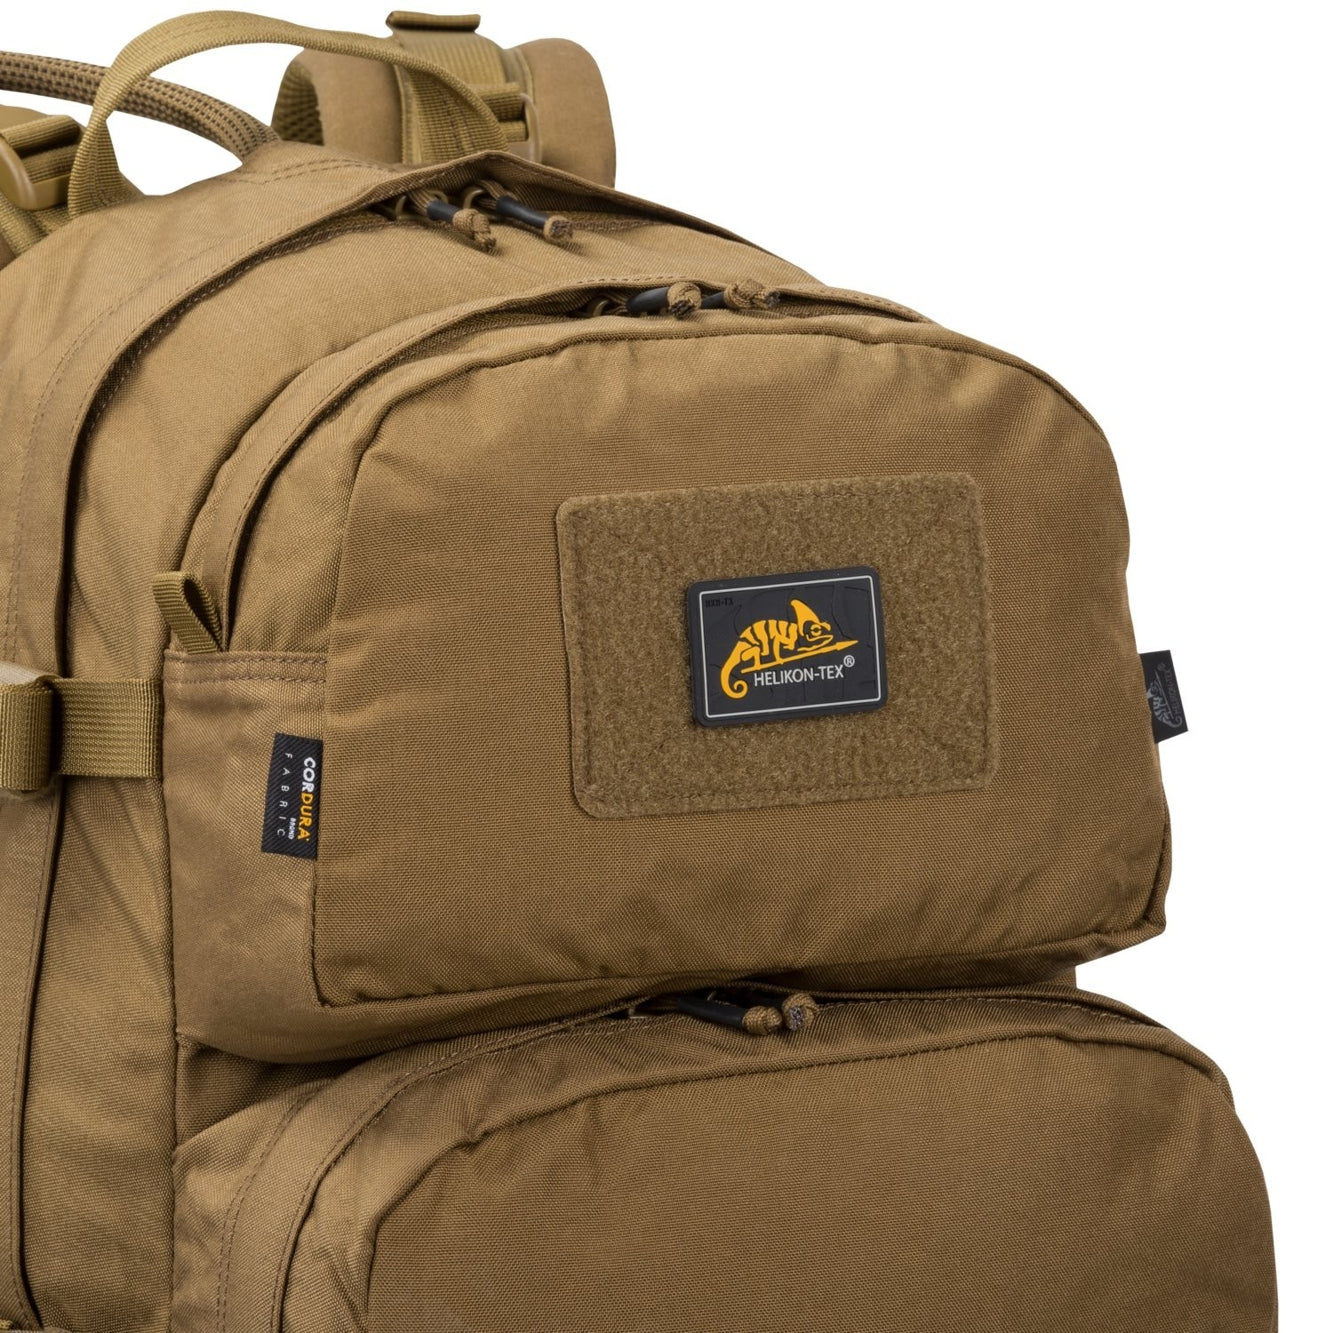 Ratel Mk2 25l backpack Coyote Brown-5